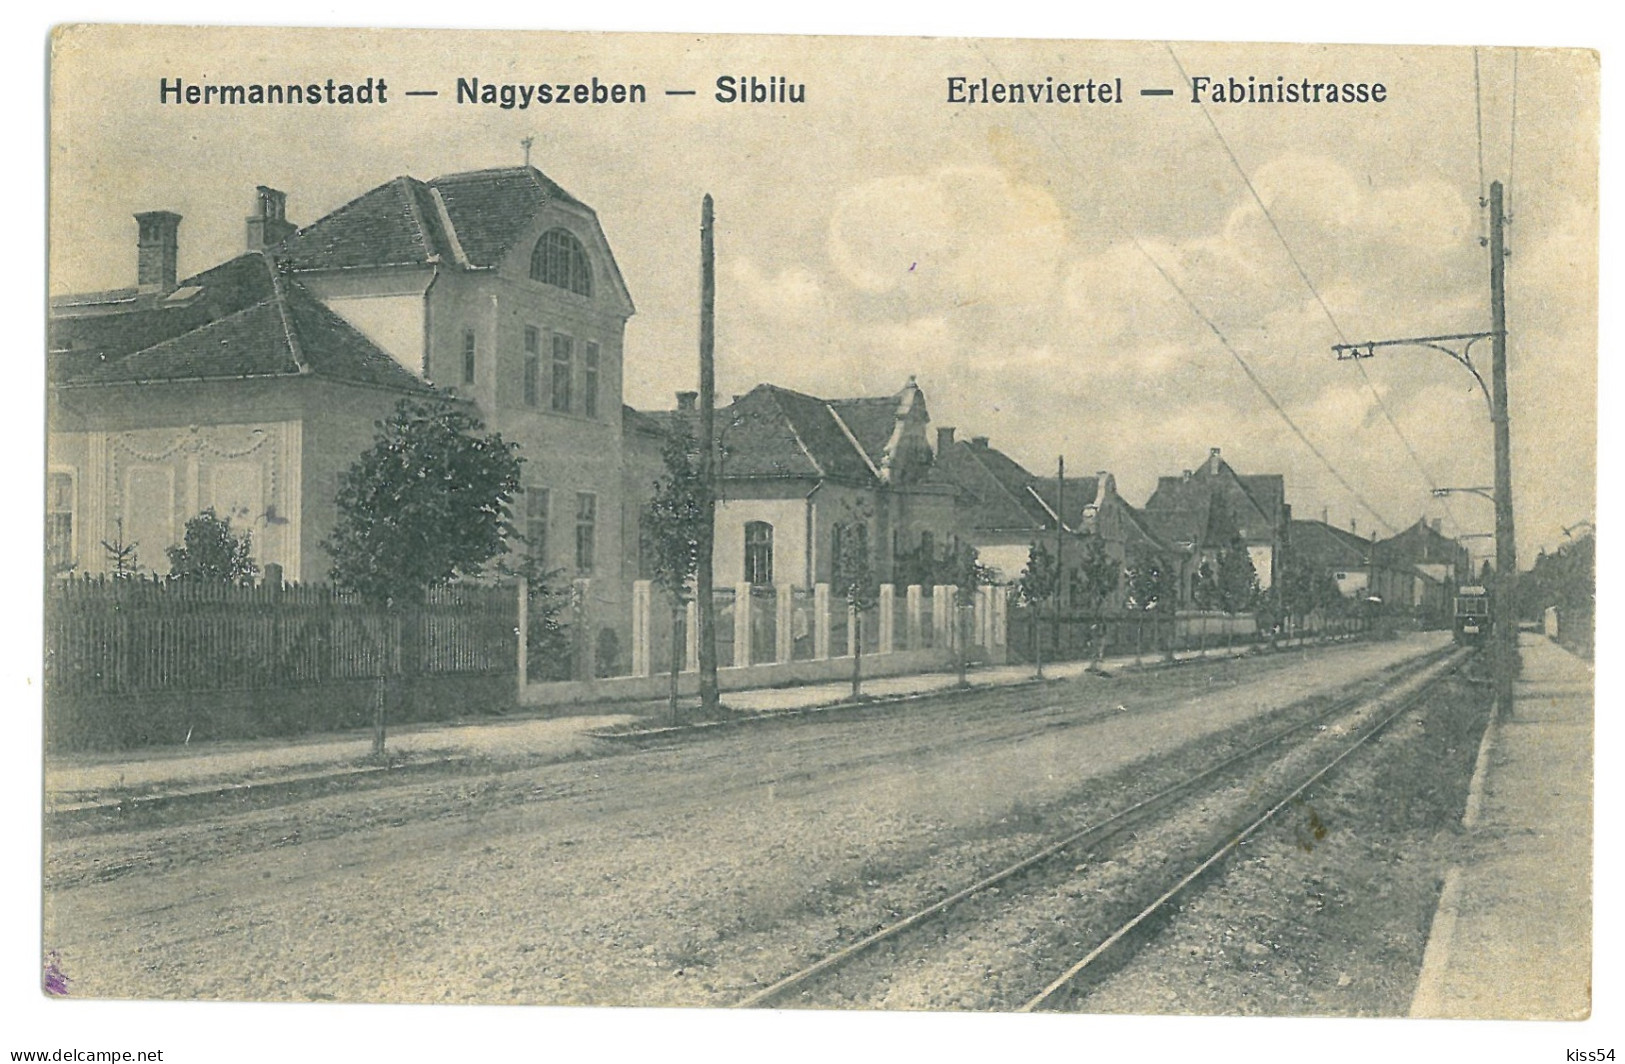 RO 77 - 23704 SIBIU, Tram, Romania - Old Postcard, CENSOR - Used - 1916 - Romania